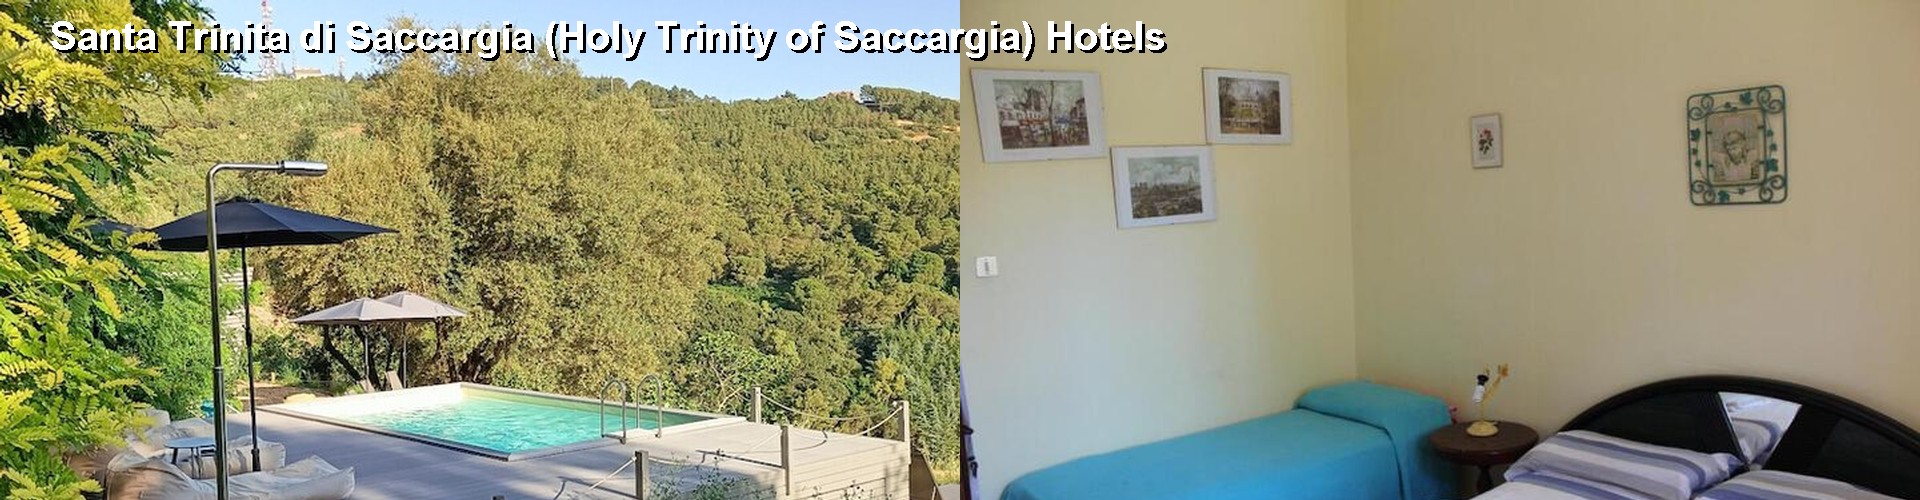 5 Best Hotels near Santa Trinita di Saccargia (Holy Trinity of Saccargia)